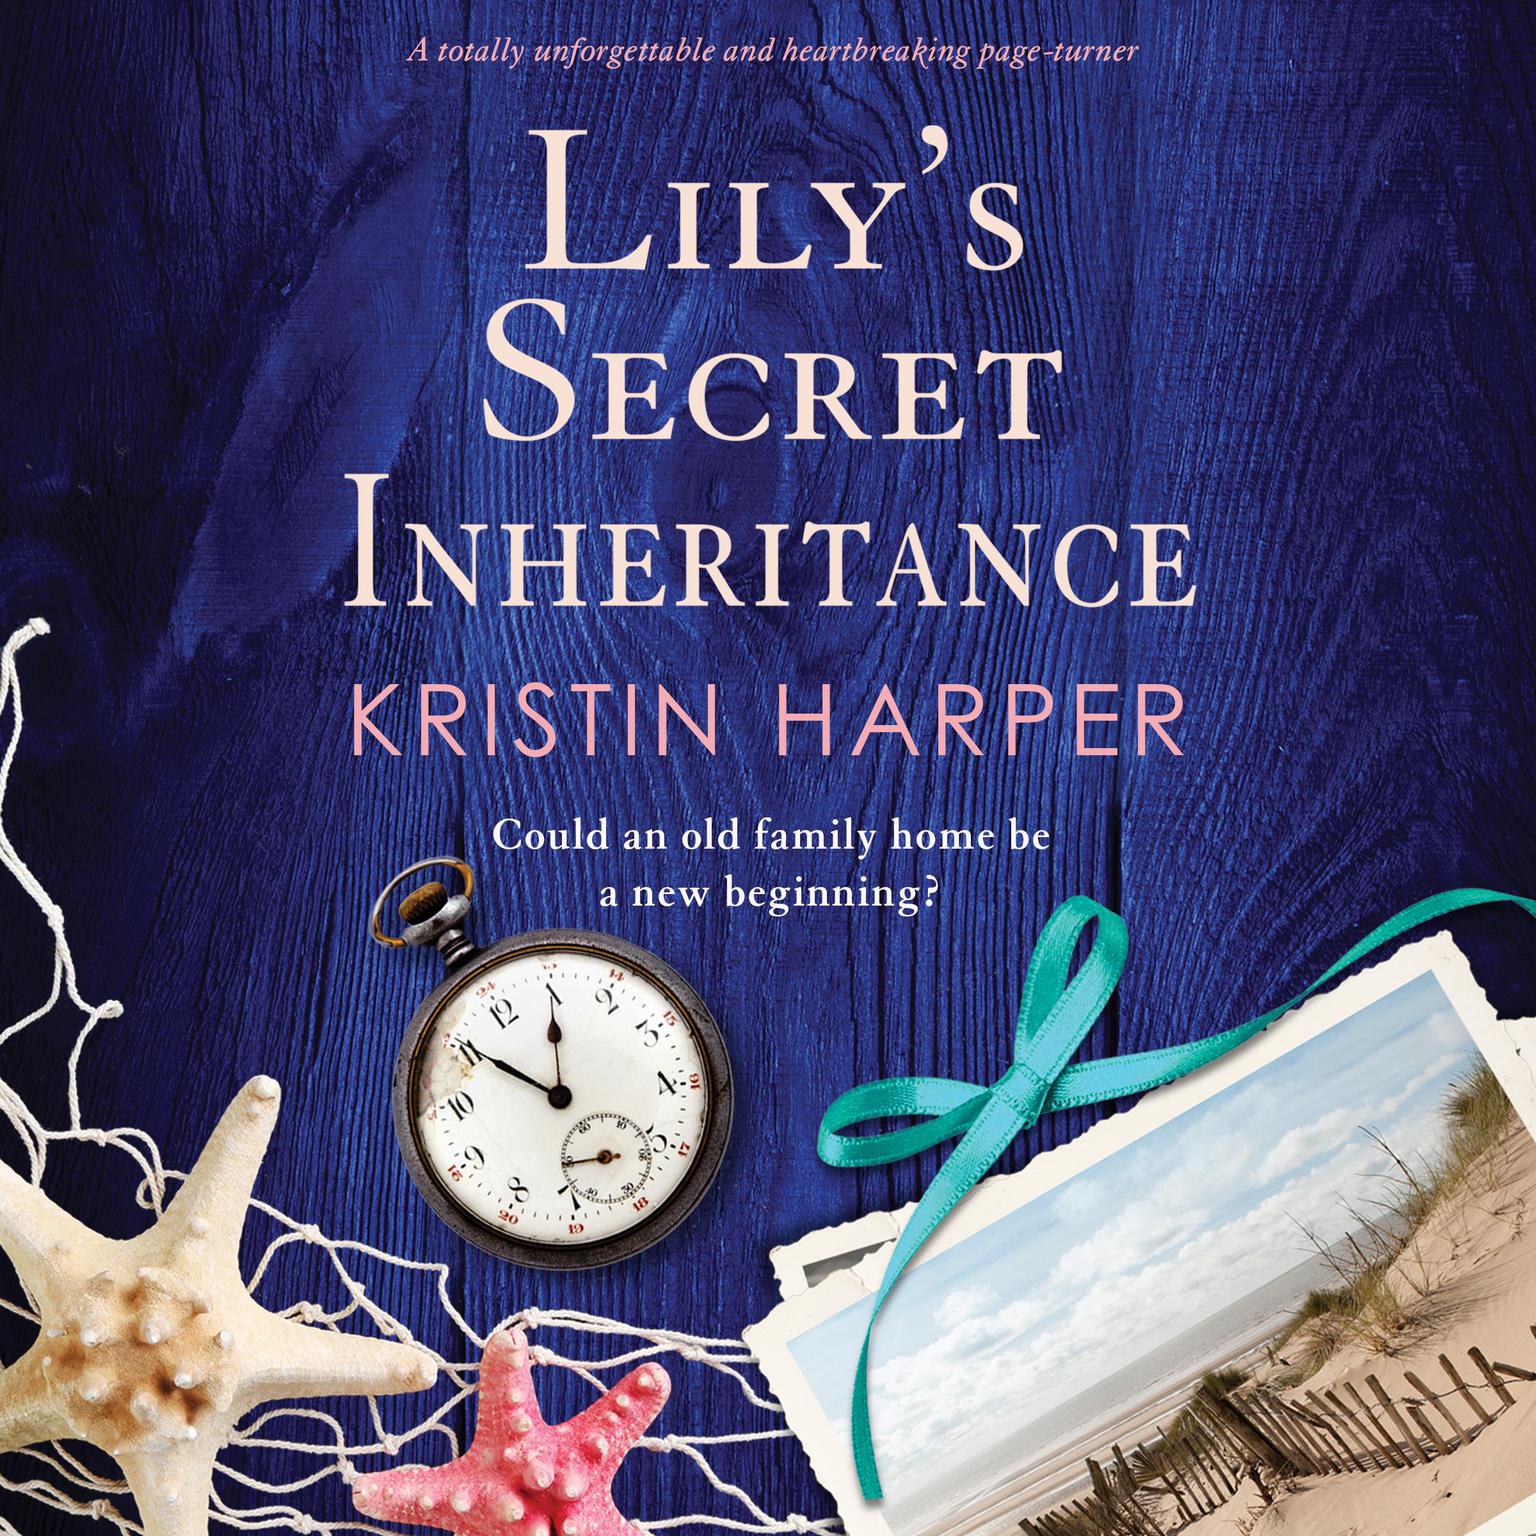 Lilys Secret Inheritance Audiobook, by Kristin Harper